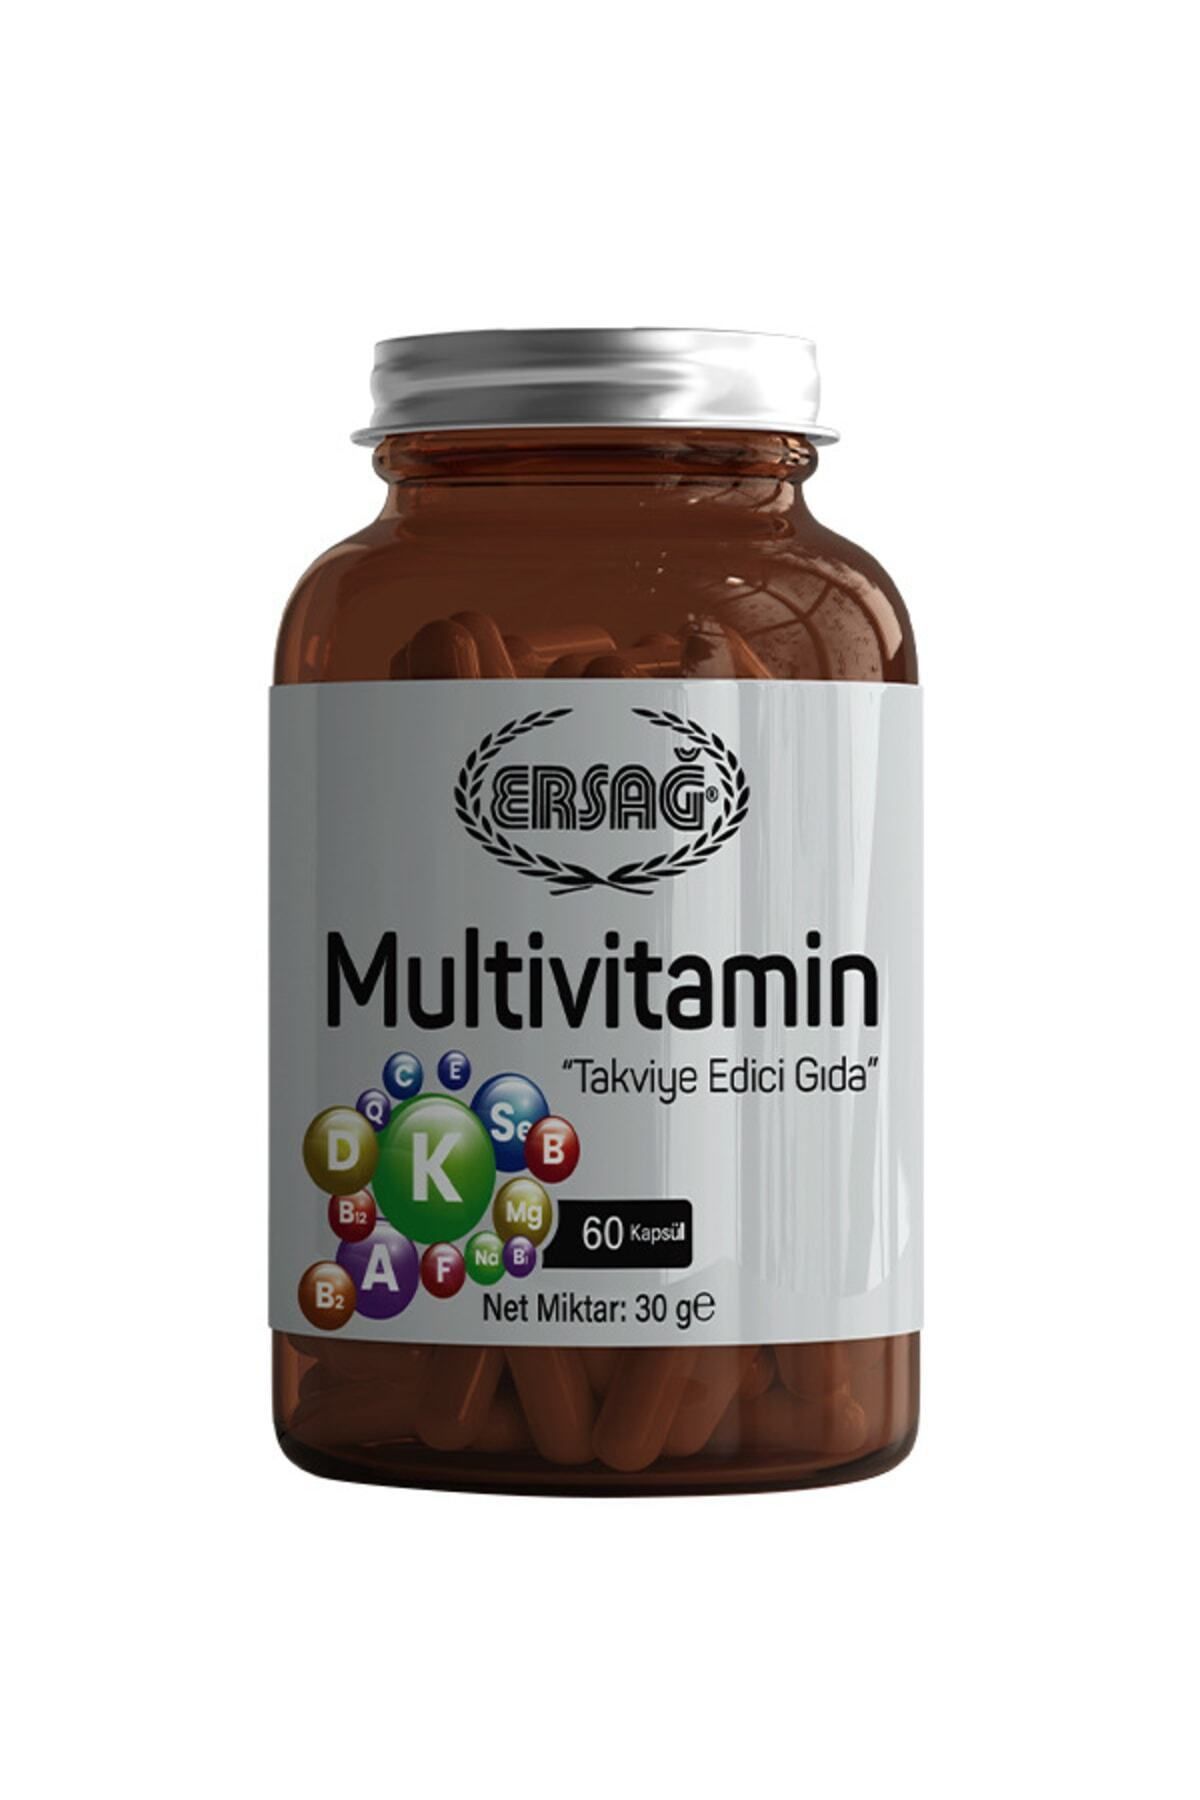 Ersağ Multivitamin Tablet 60 Kapsül